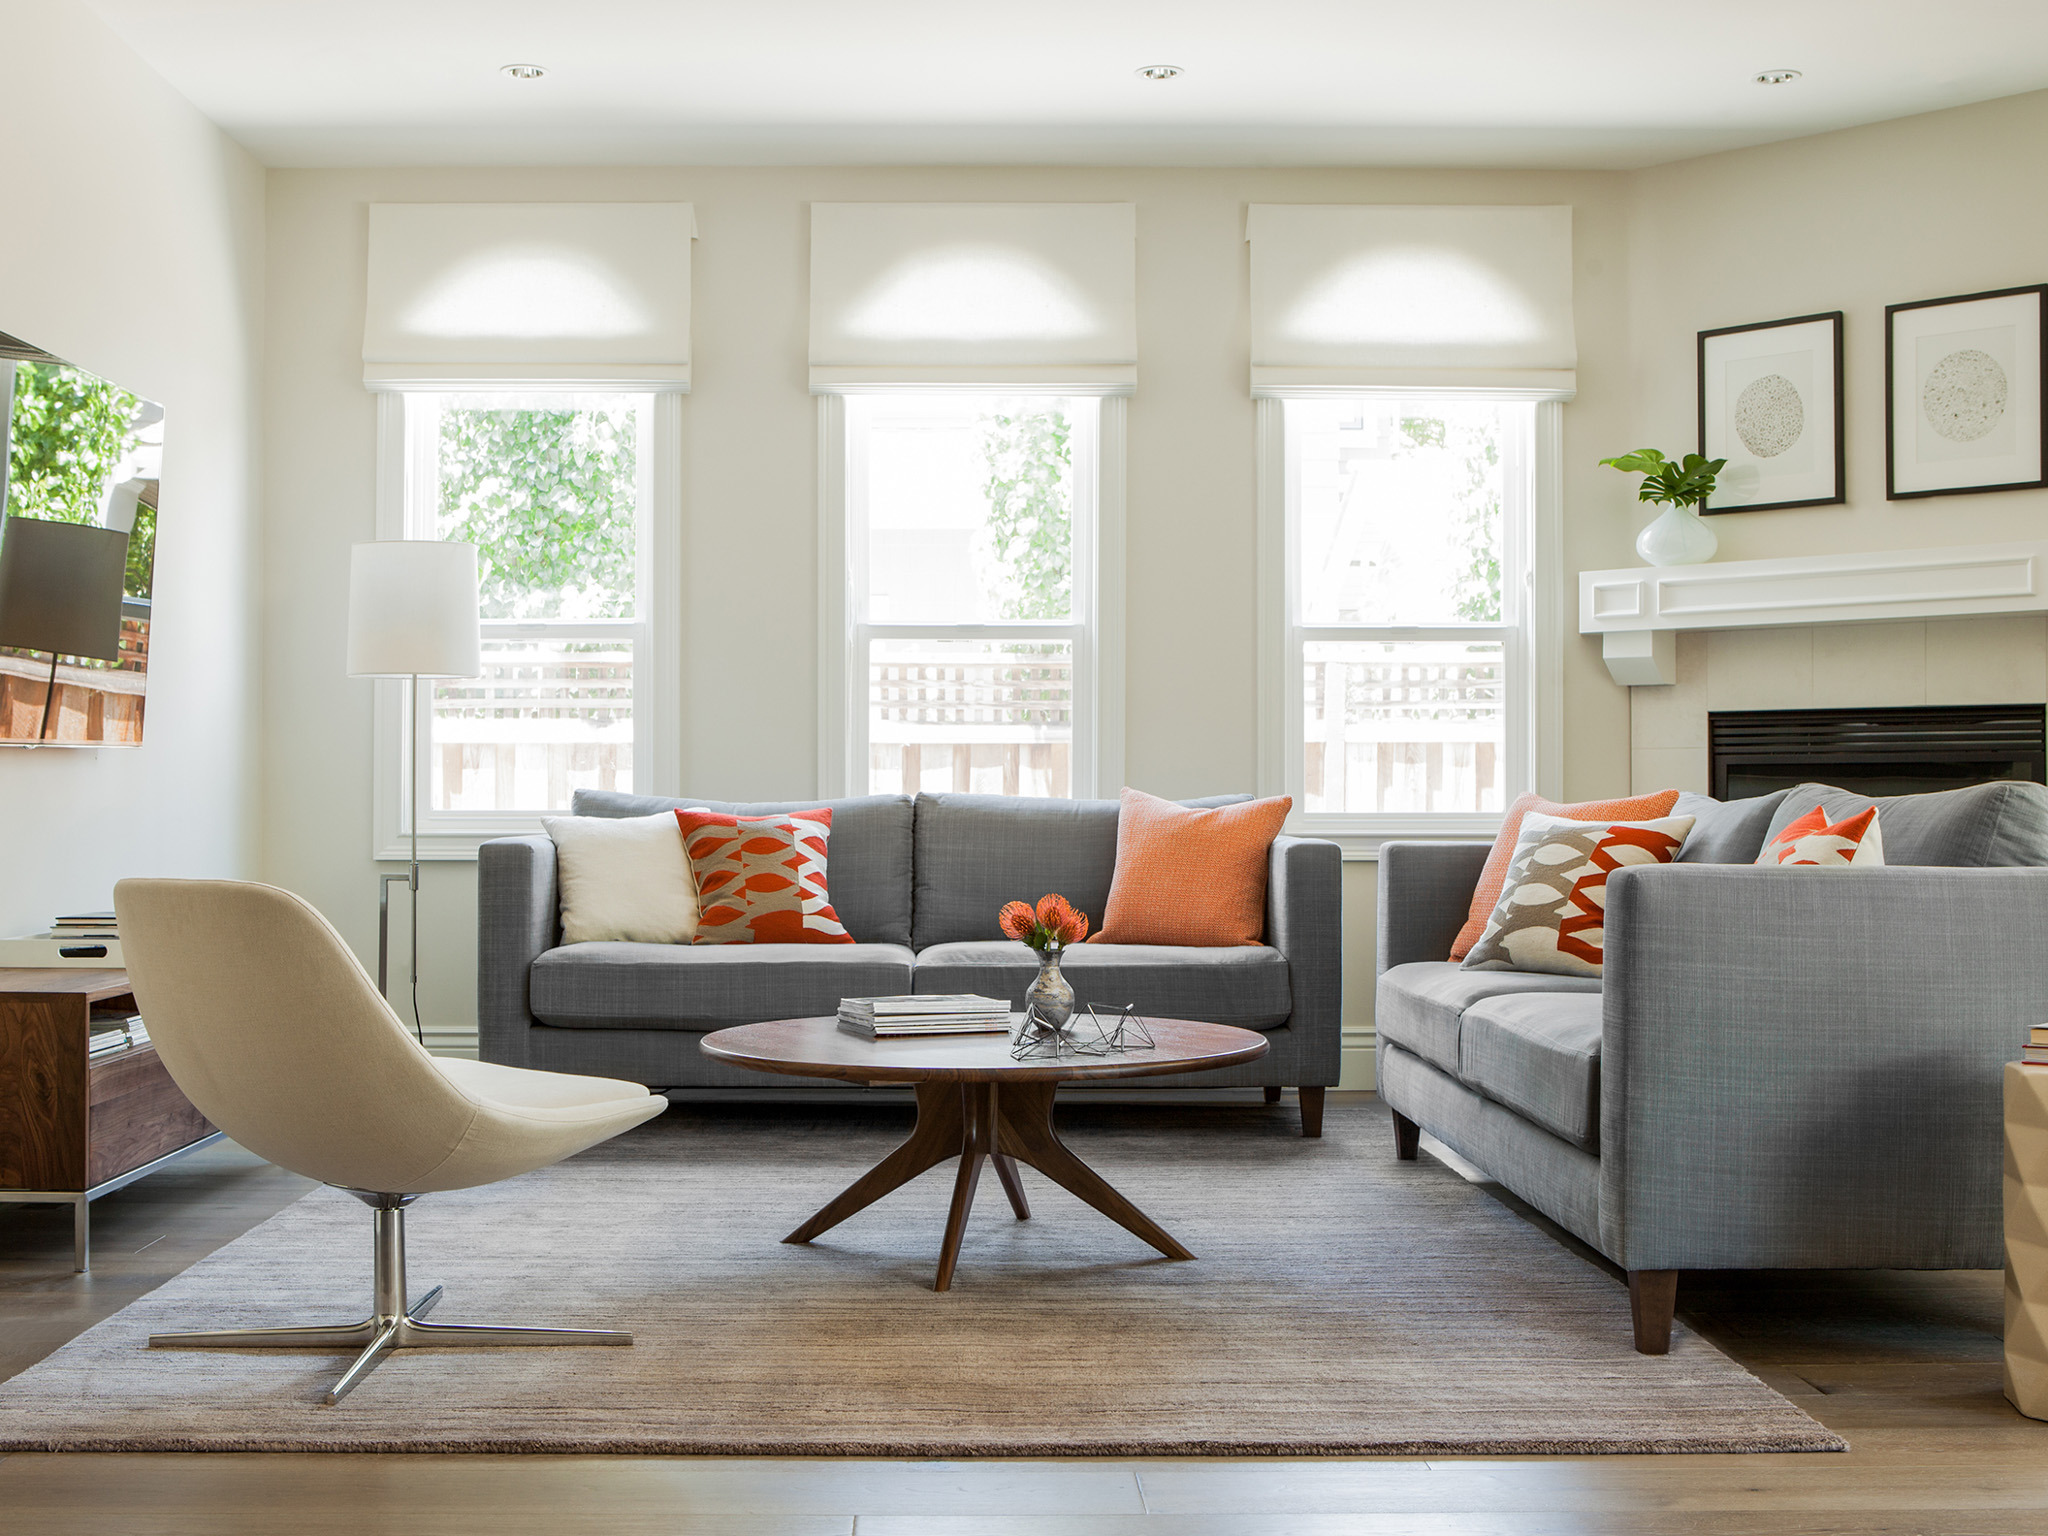 حدوتة مصرية: New home designs latest.: Modern homes interior designs